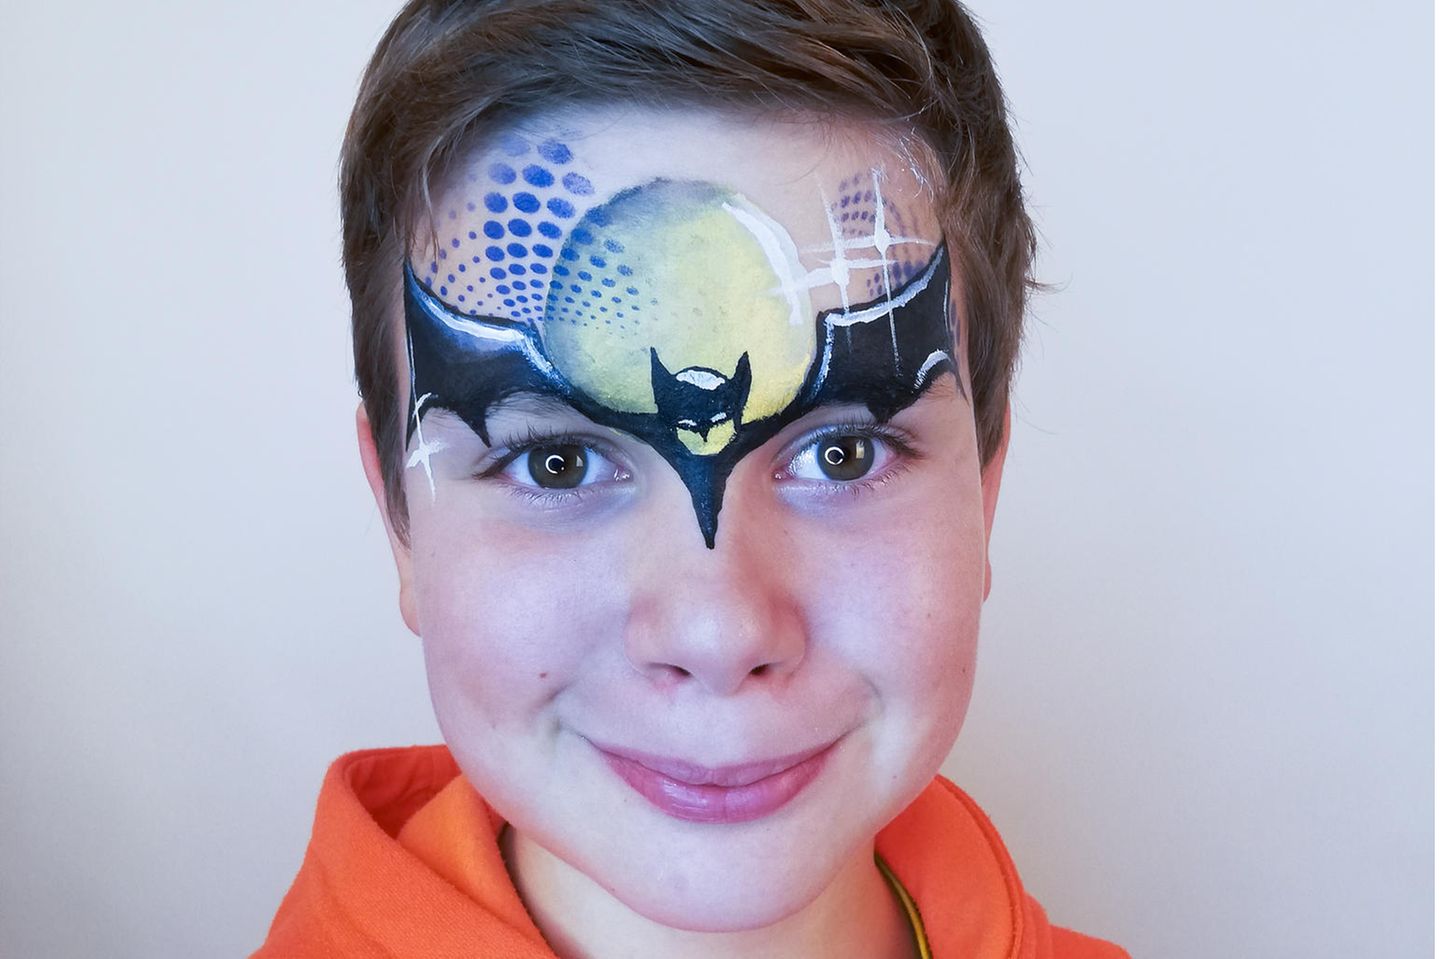 Batman schminken: Junge mit Batman